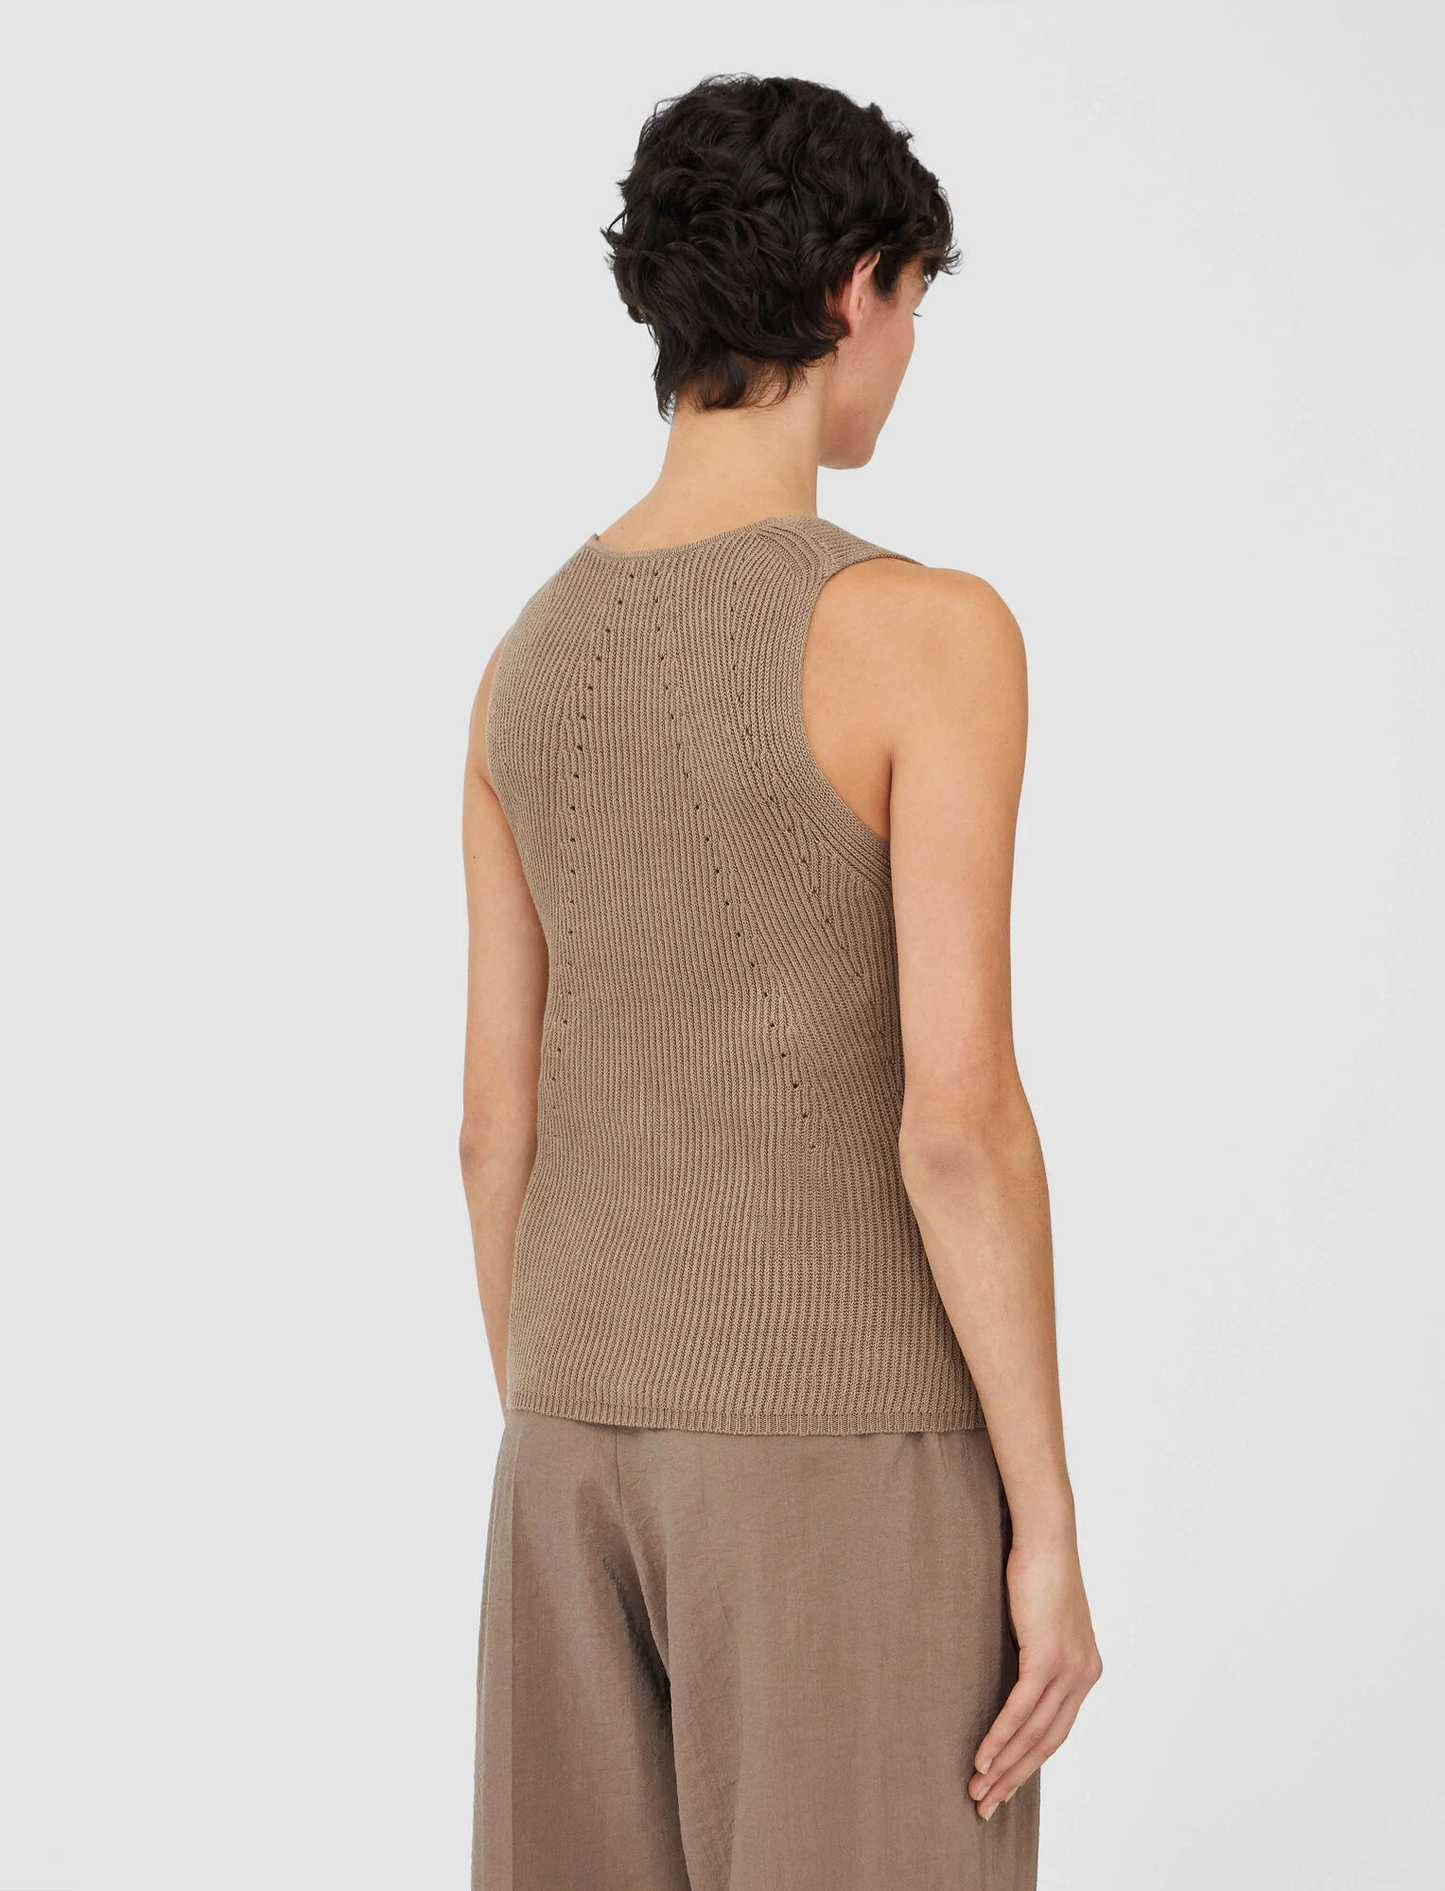 Linen cotton knitted vest - frozen mocha Top JOSEPH